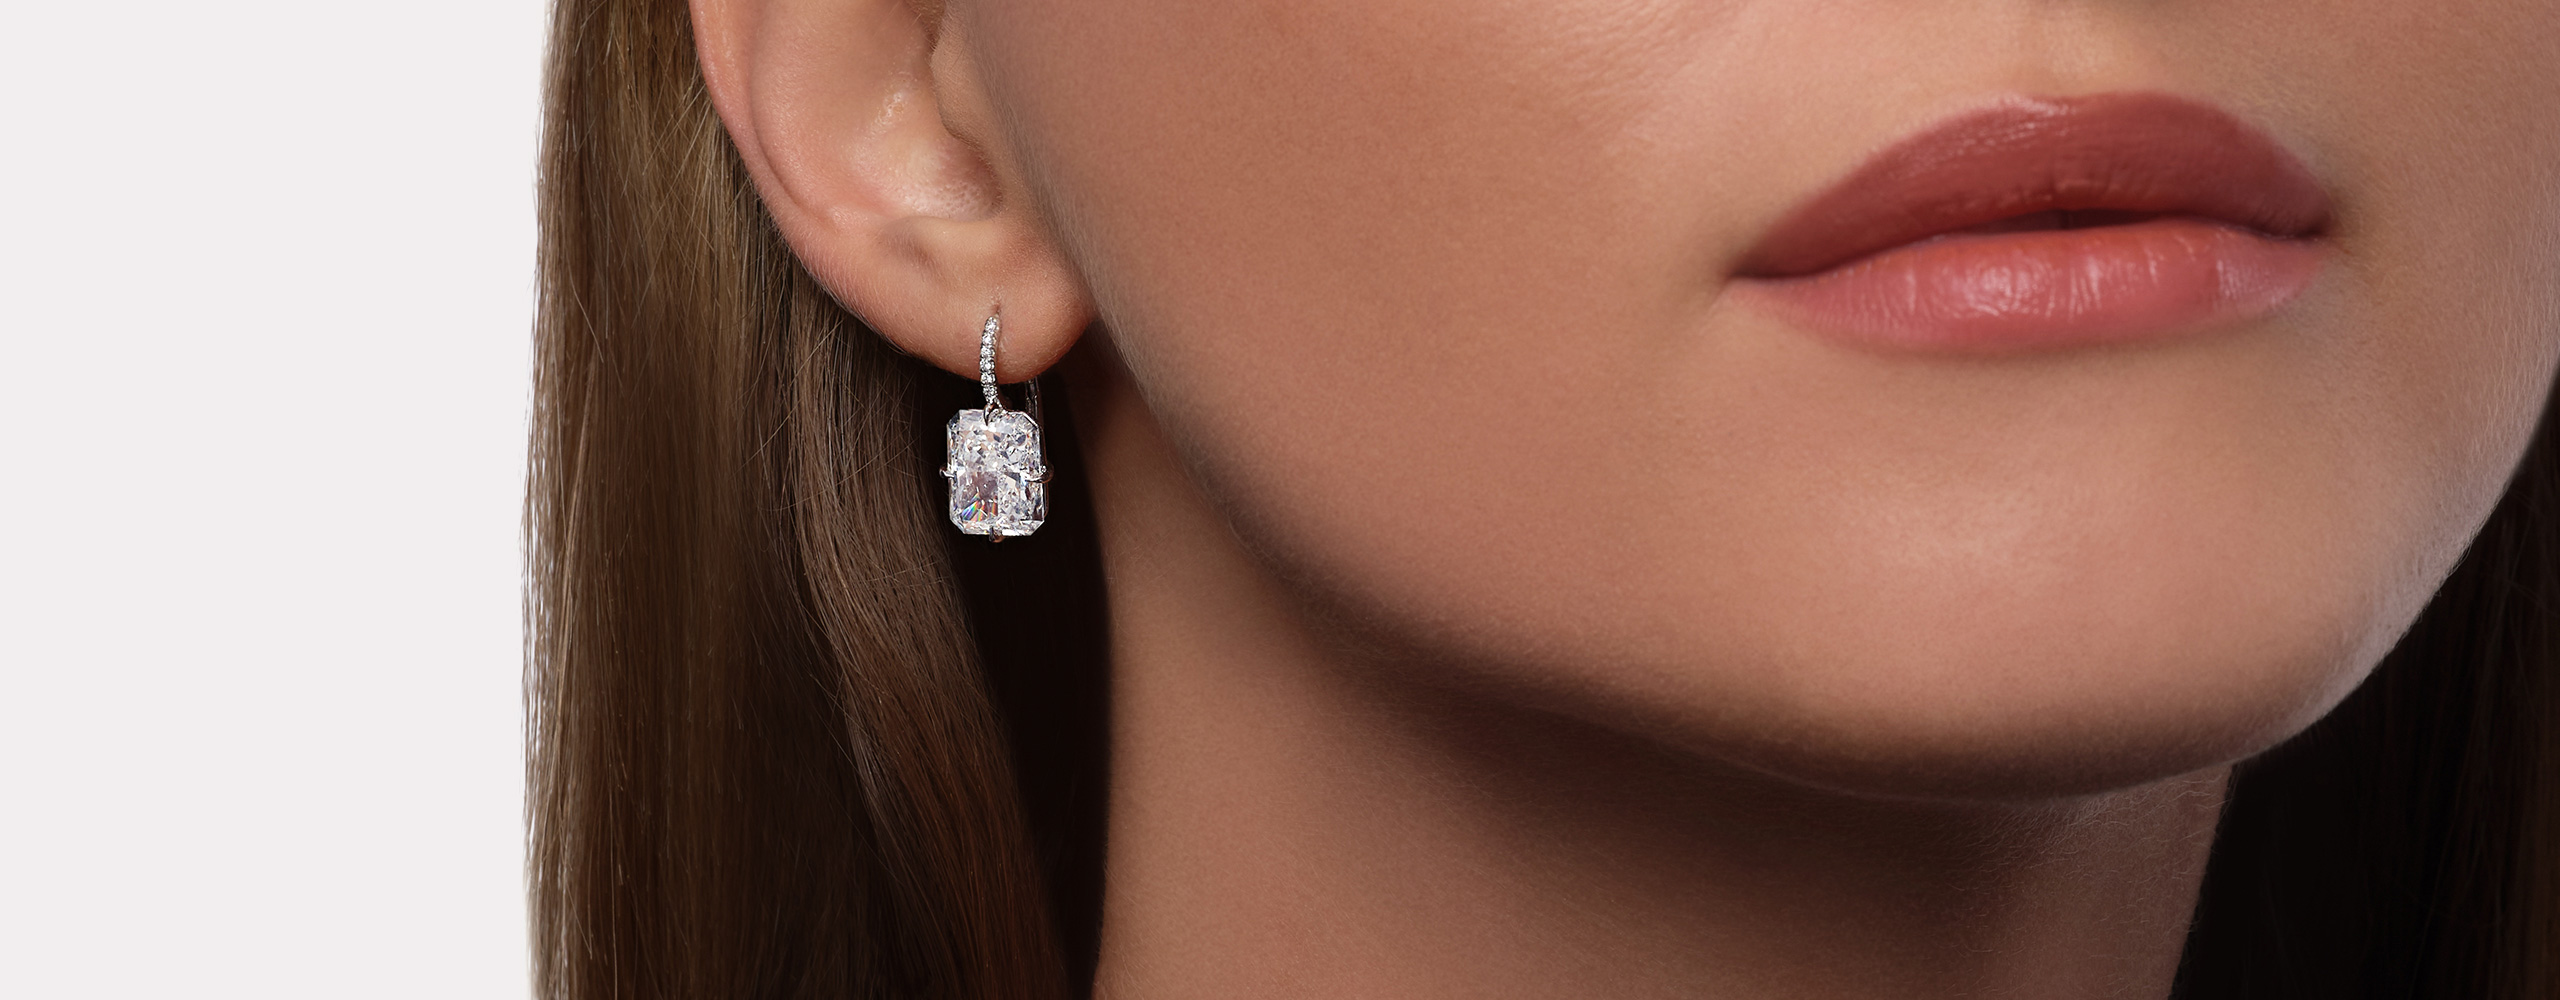 Radiant Cut Diamond Earrings | Diamonds Factory US